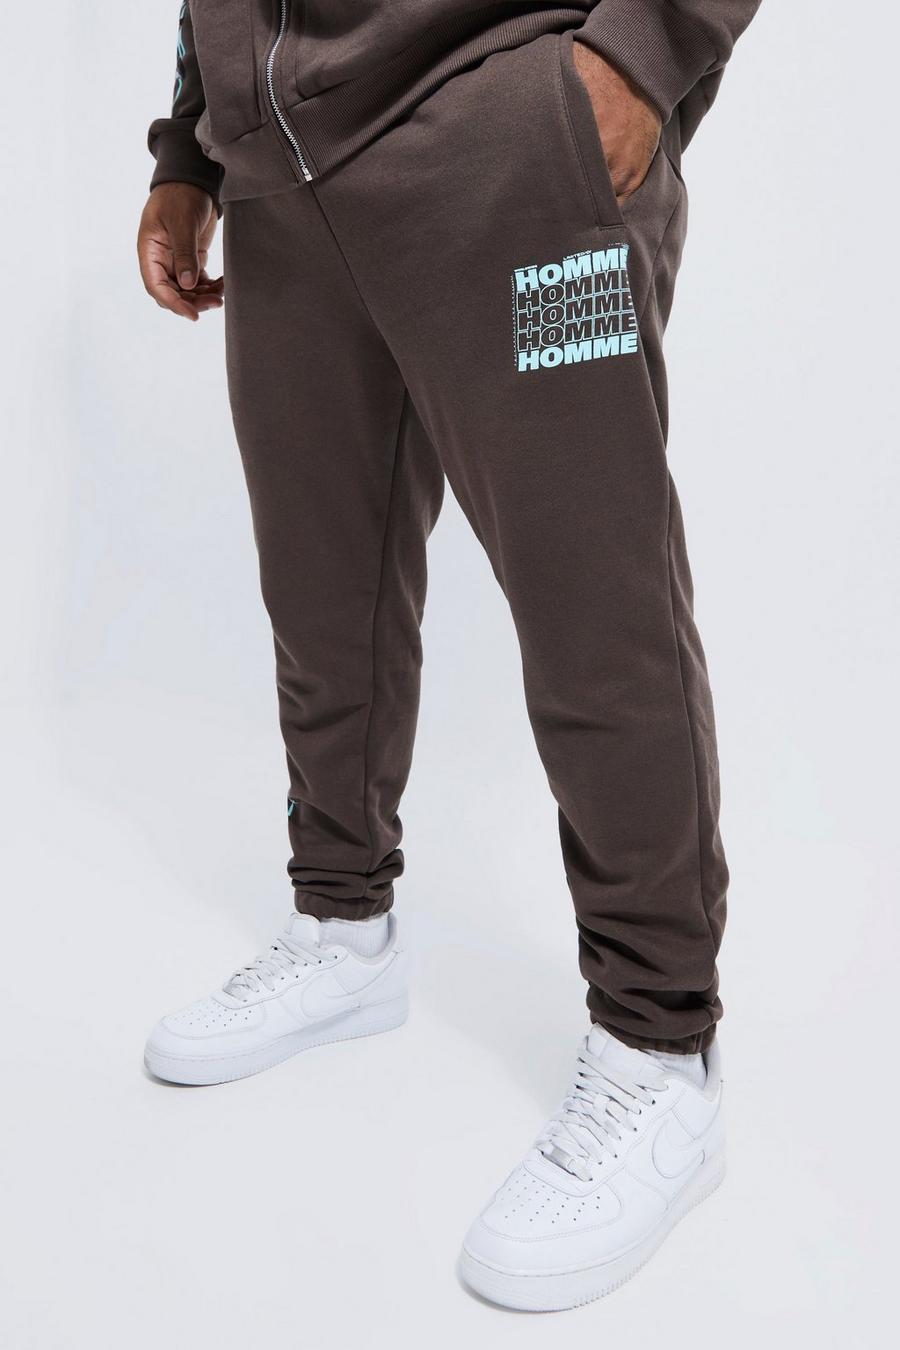 Pantalón deportivo Plus Regular con estampado gráfico Homme, Chocolate image number 1